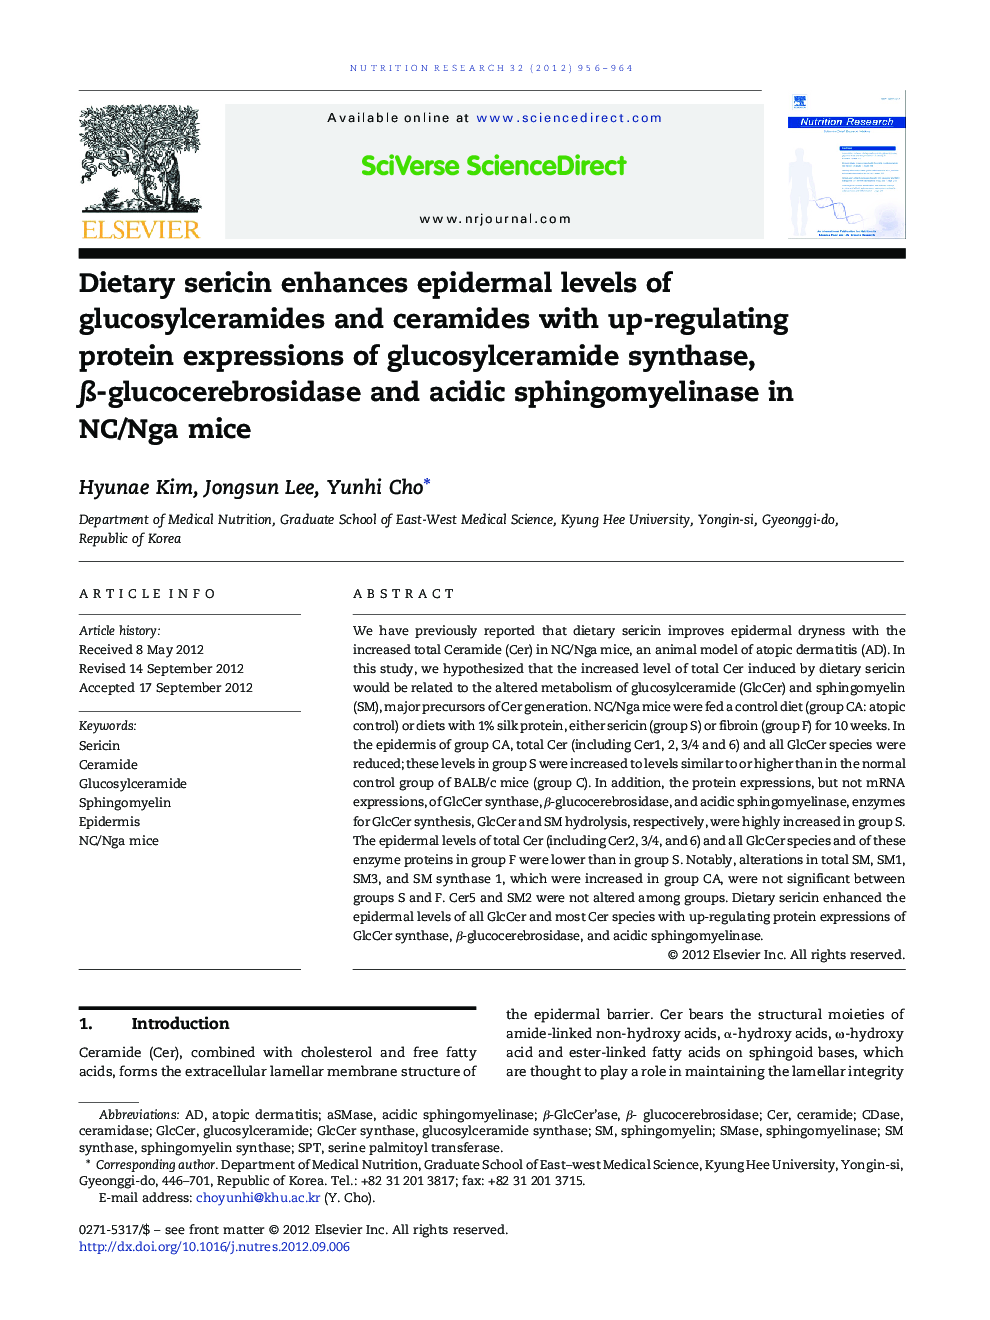 Dietary sericin enhances epidermal levels of glucosylceramides and ceramides with up-regulating protein expressions of glucosylceramide synthase, Î²-glucocerebrosidase and acidic sphingomyelinase in NC/Nga mice